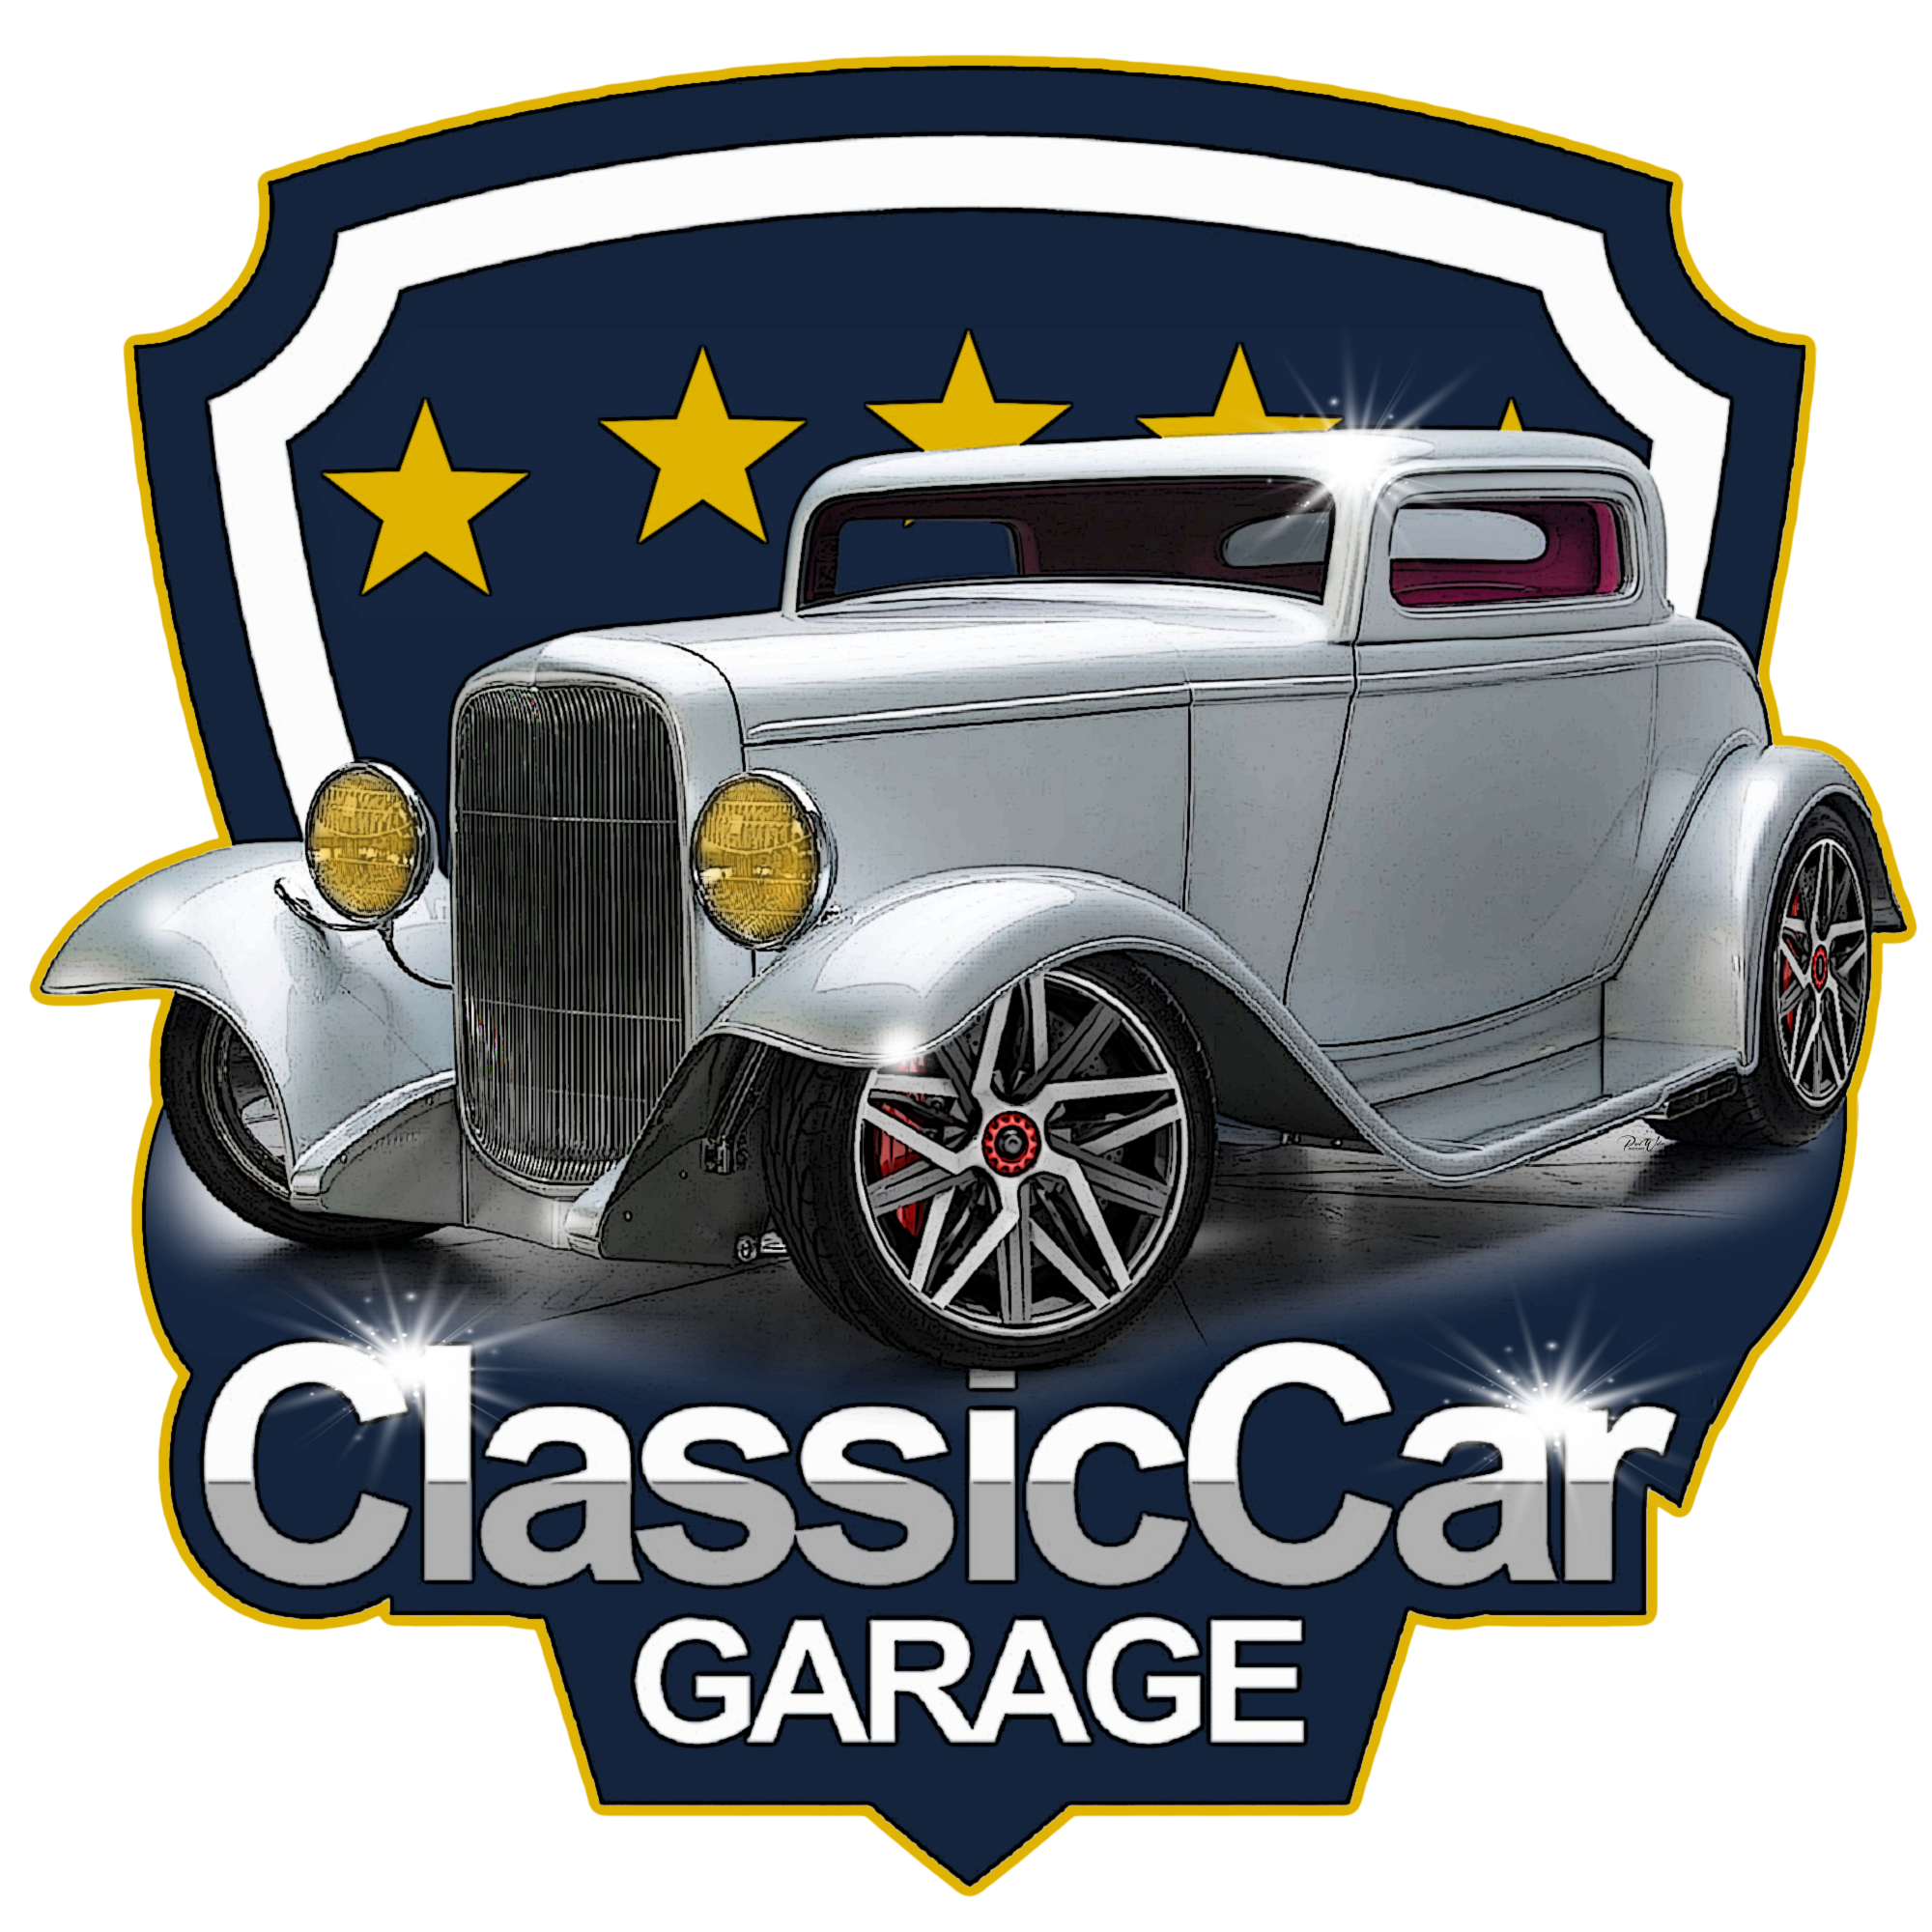 Classic Car Garage - Image